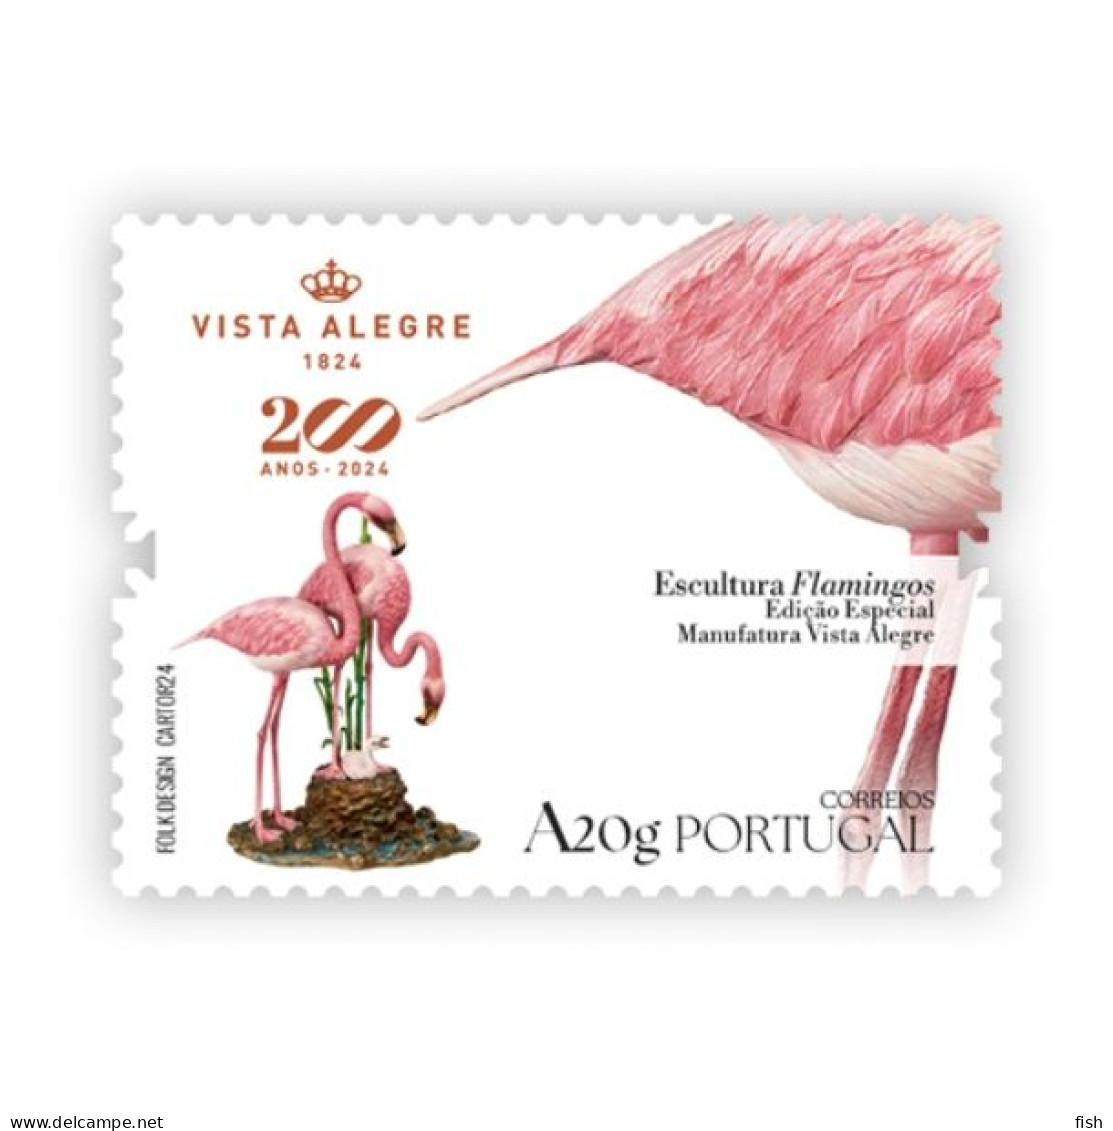 Portugal ** & 200 Years Of Vista Alegre, Flamingo Sculpture, Special Edition Manufatura Vista Alegre 1824-2024 (799) - Usines & Industries